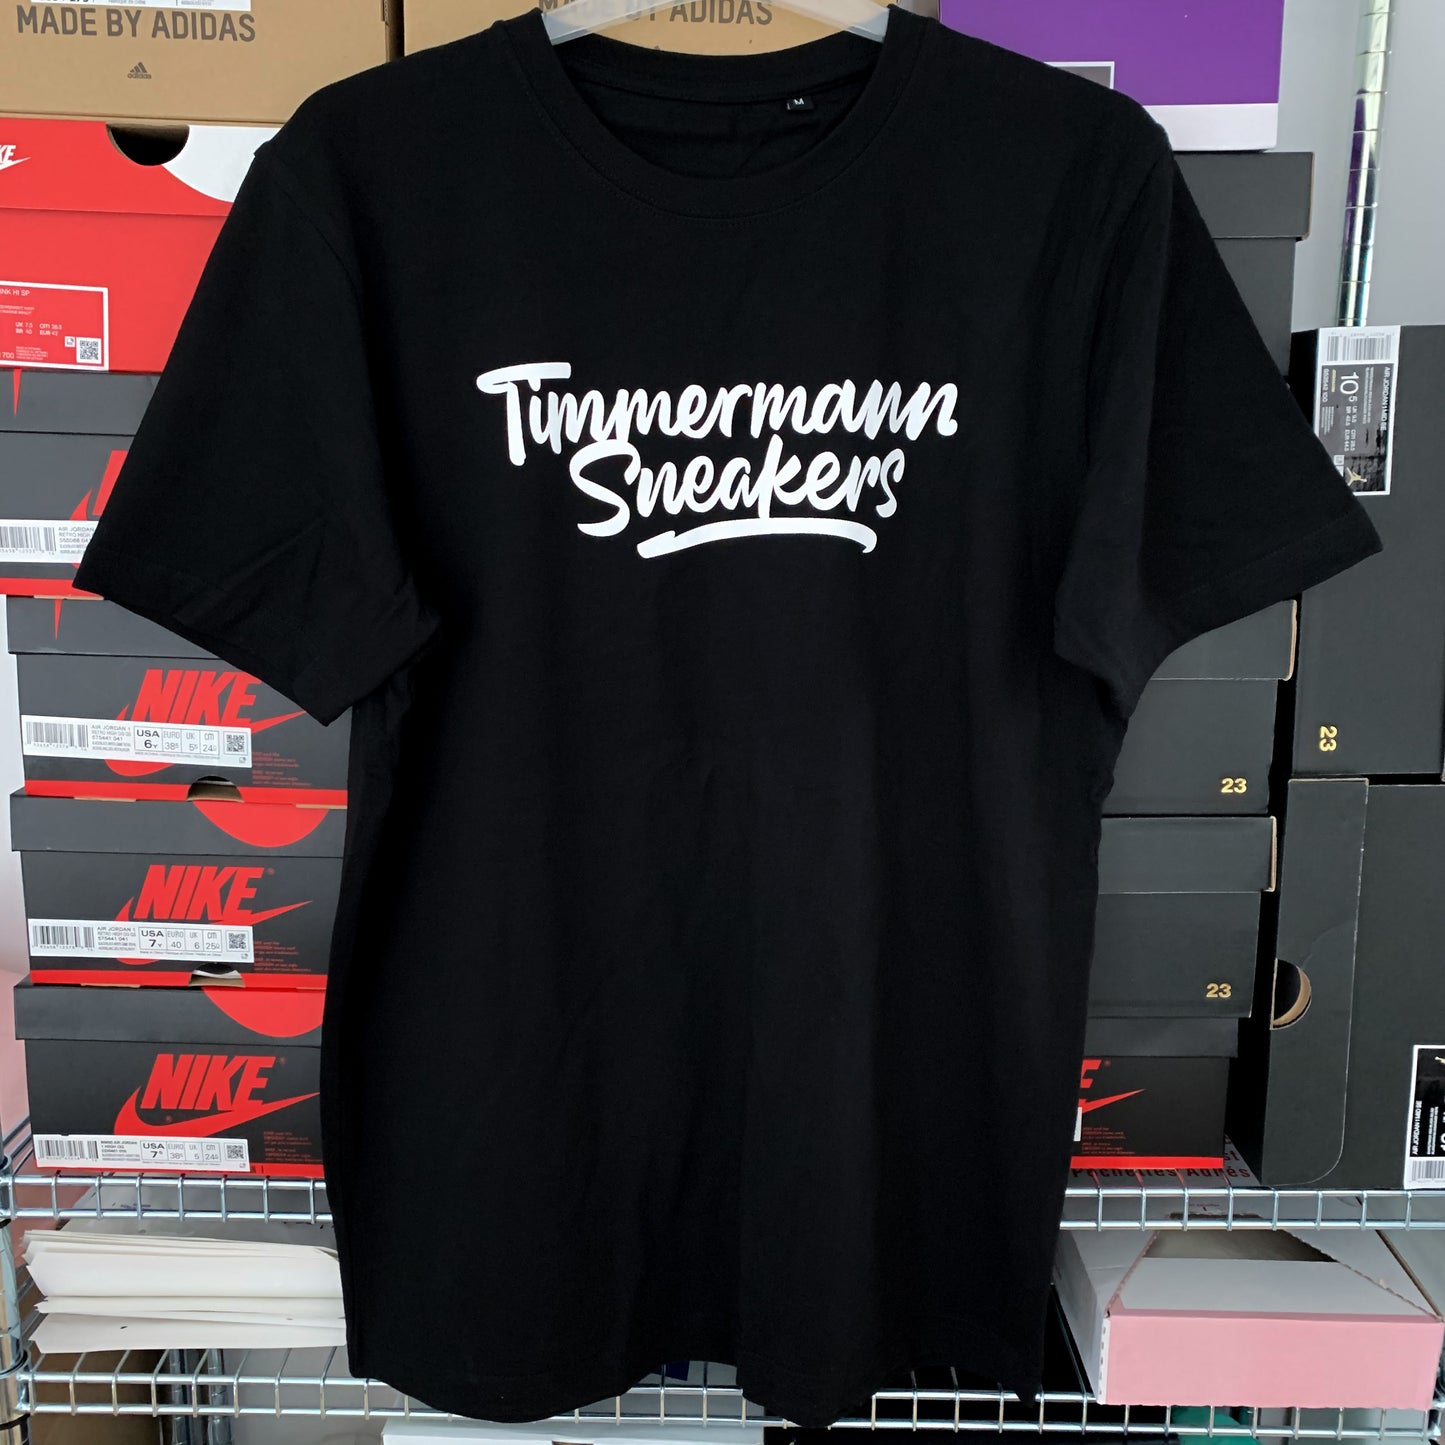 Timmermann Sneakers T-Shirt: Sort